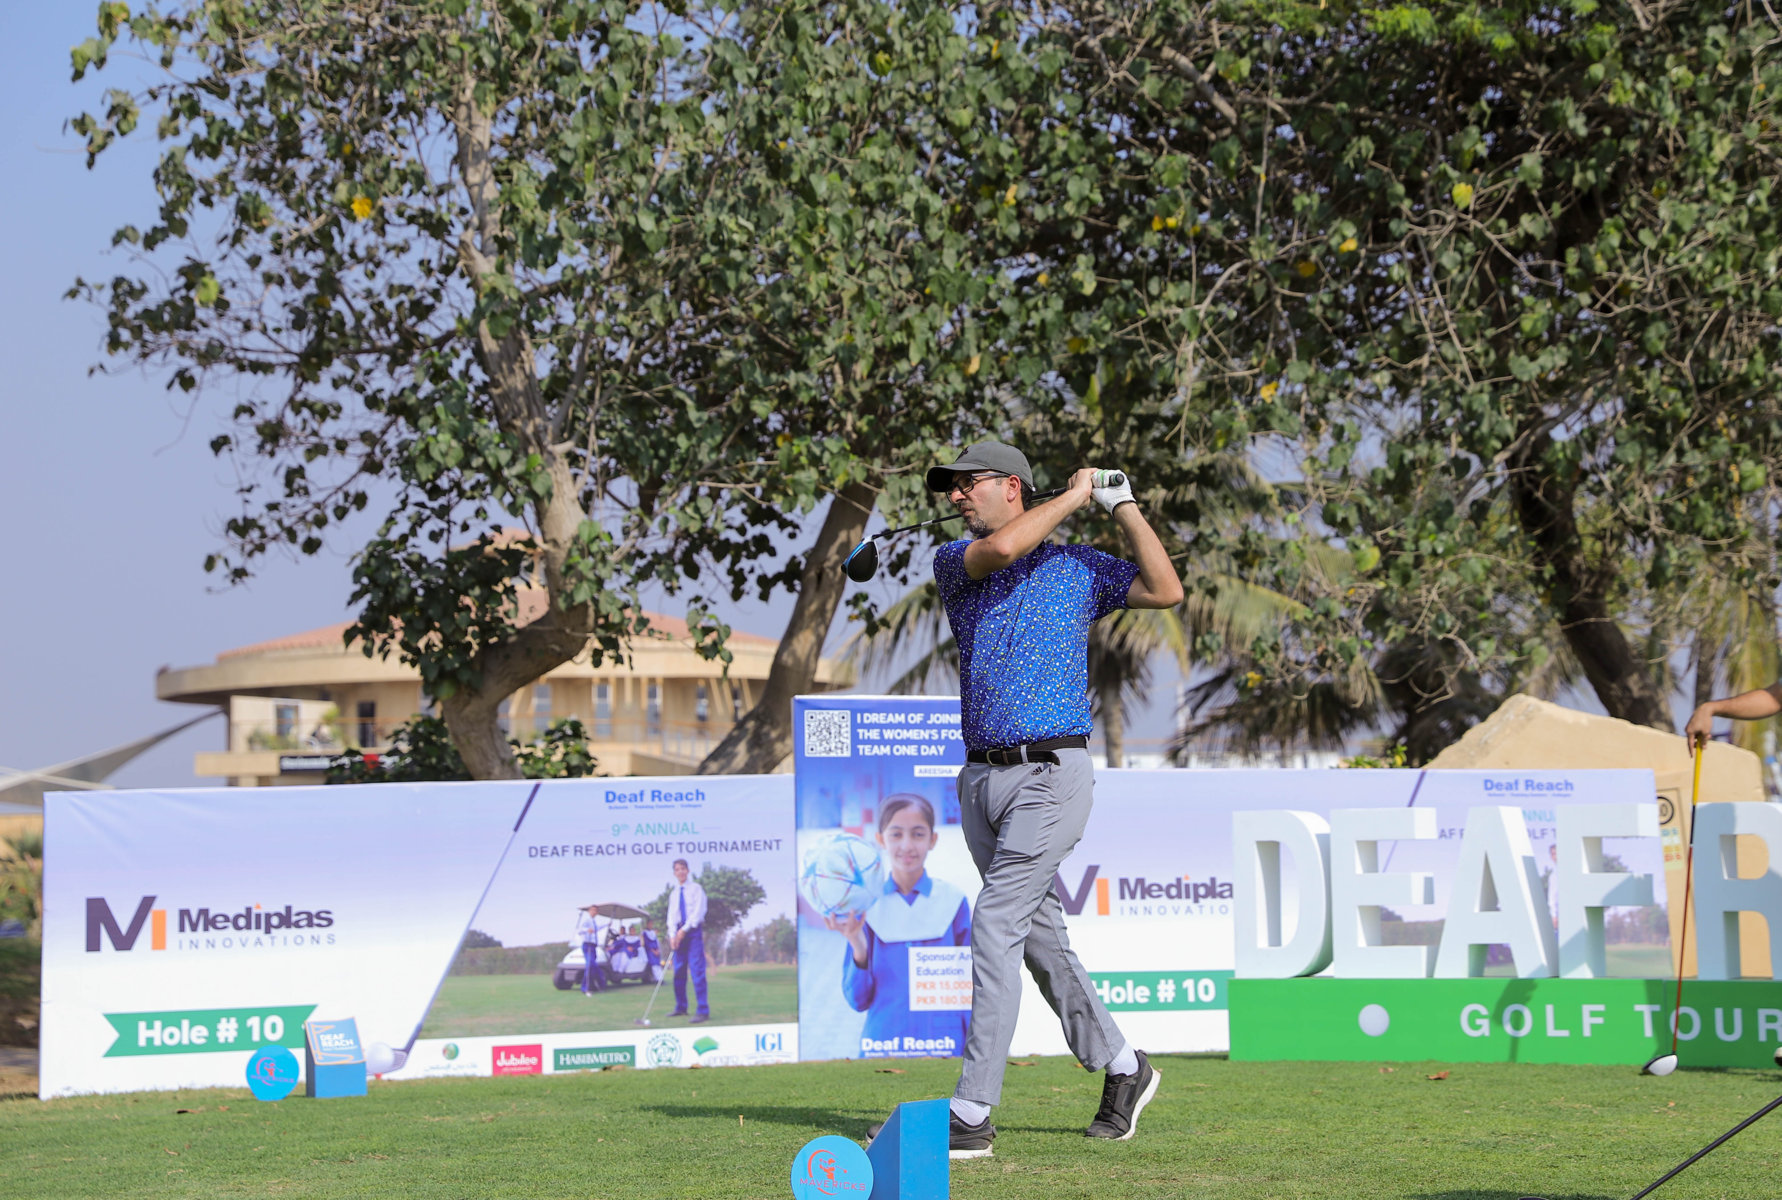 Deaf Reach hosted its 9th Annual Charity Golf Tournament in Karachi